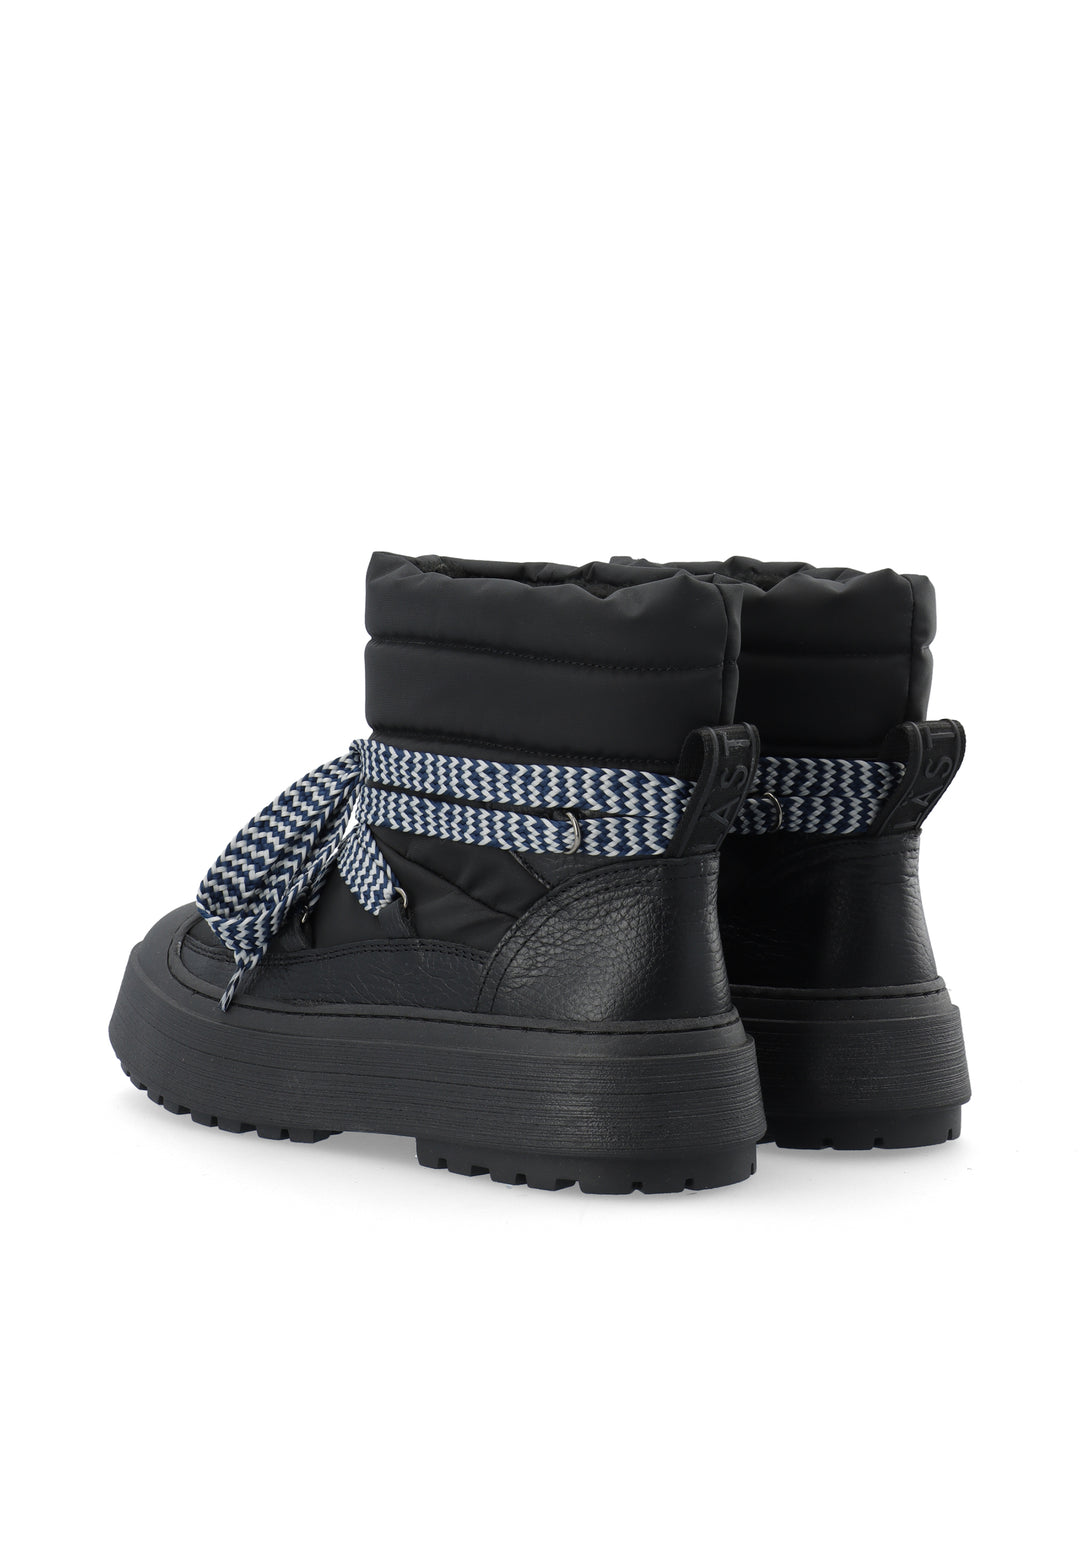 LÄST Snowboot - Leather/Textile - Black, Warm Lining*Snowboot - Leather/Textile - Black, Warm Lining Ankle Boots Black